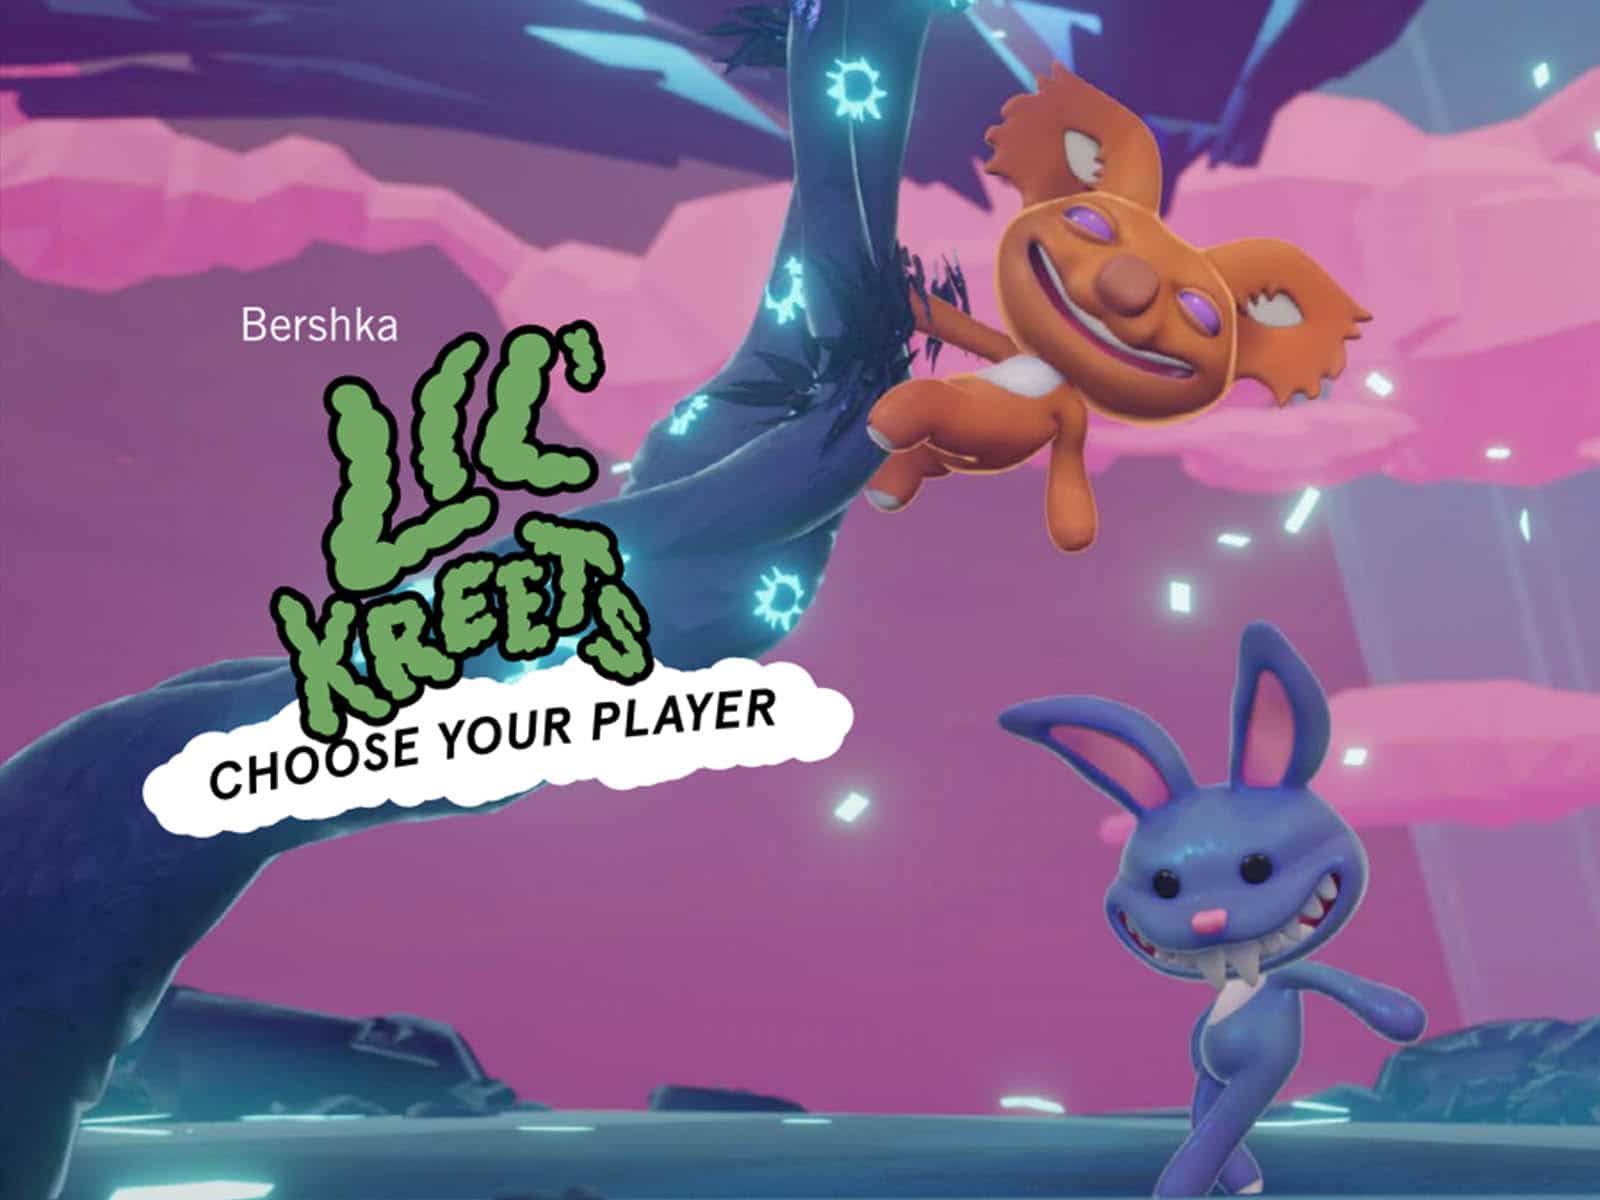 Lil’ Kreets x Bershka: choose your player